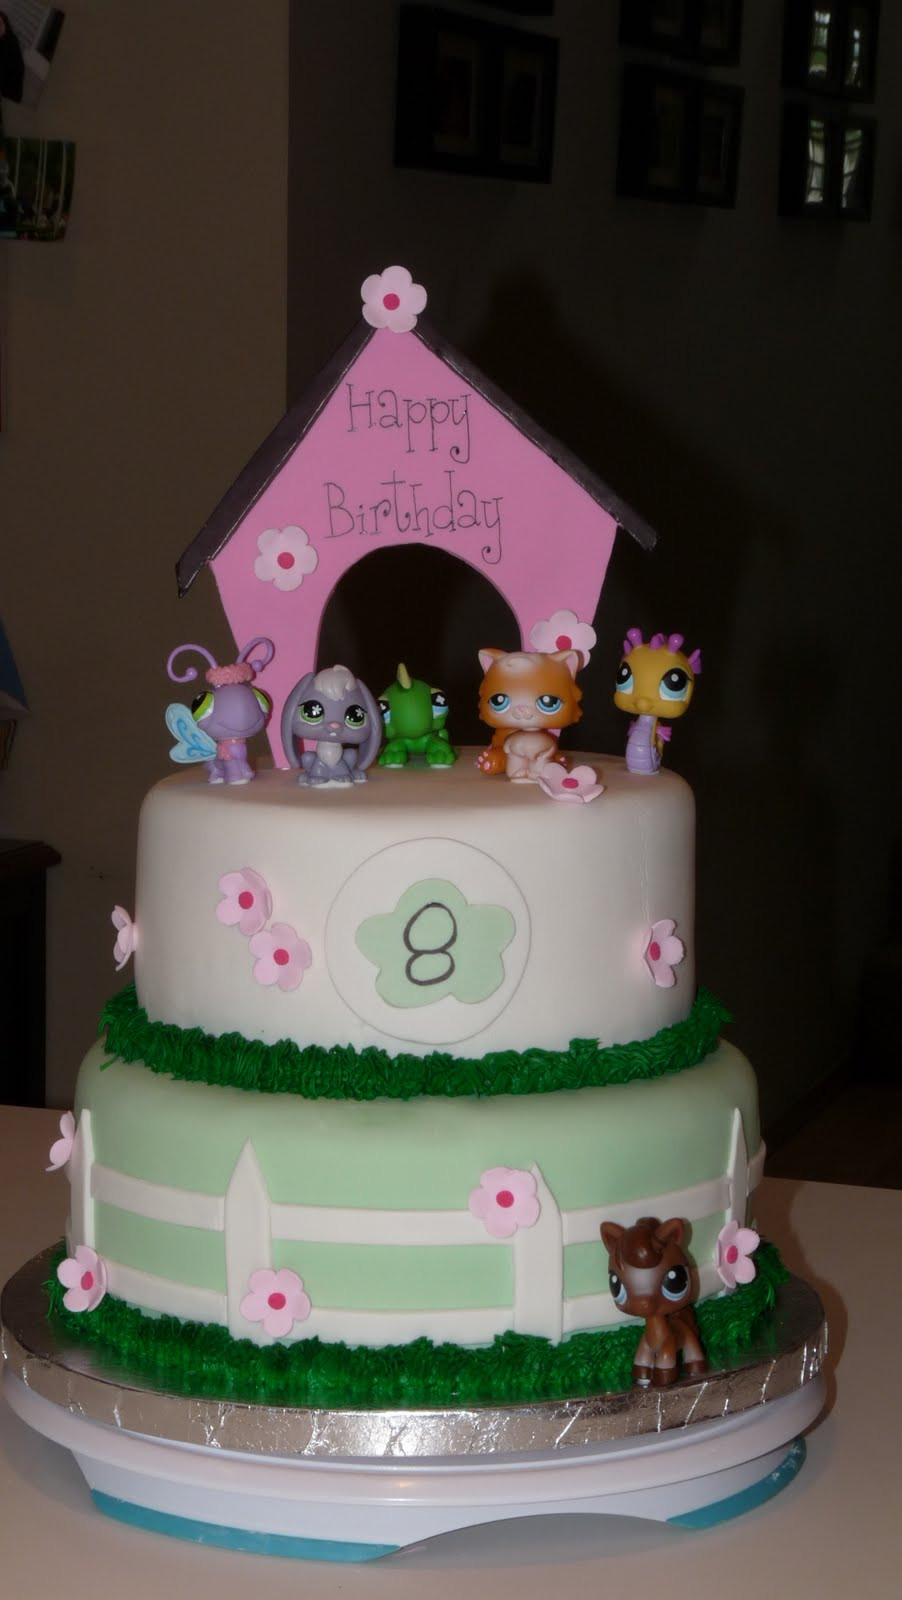 Littlest Pet Shop Birthday Cake
 Girly Gatherings Littlest Pet Shop Birthday Cake & Goo s